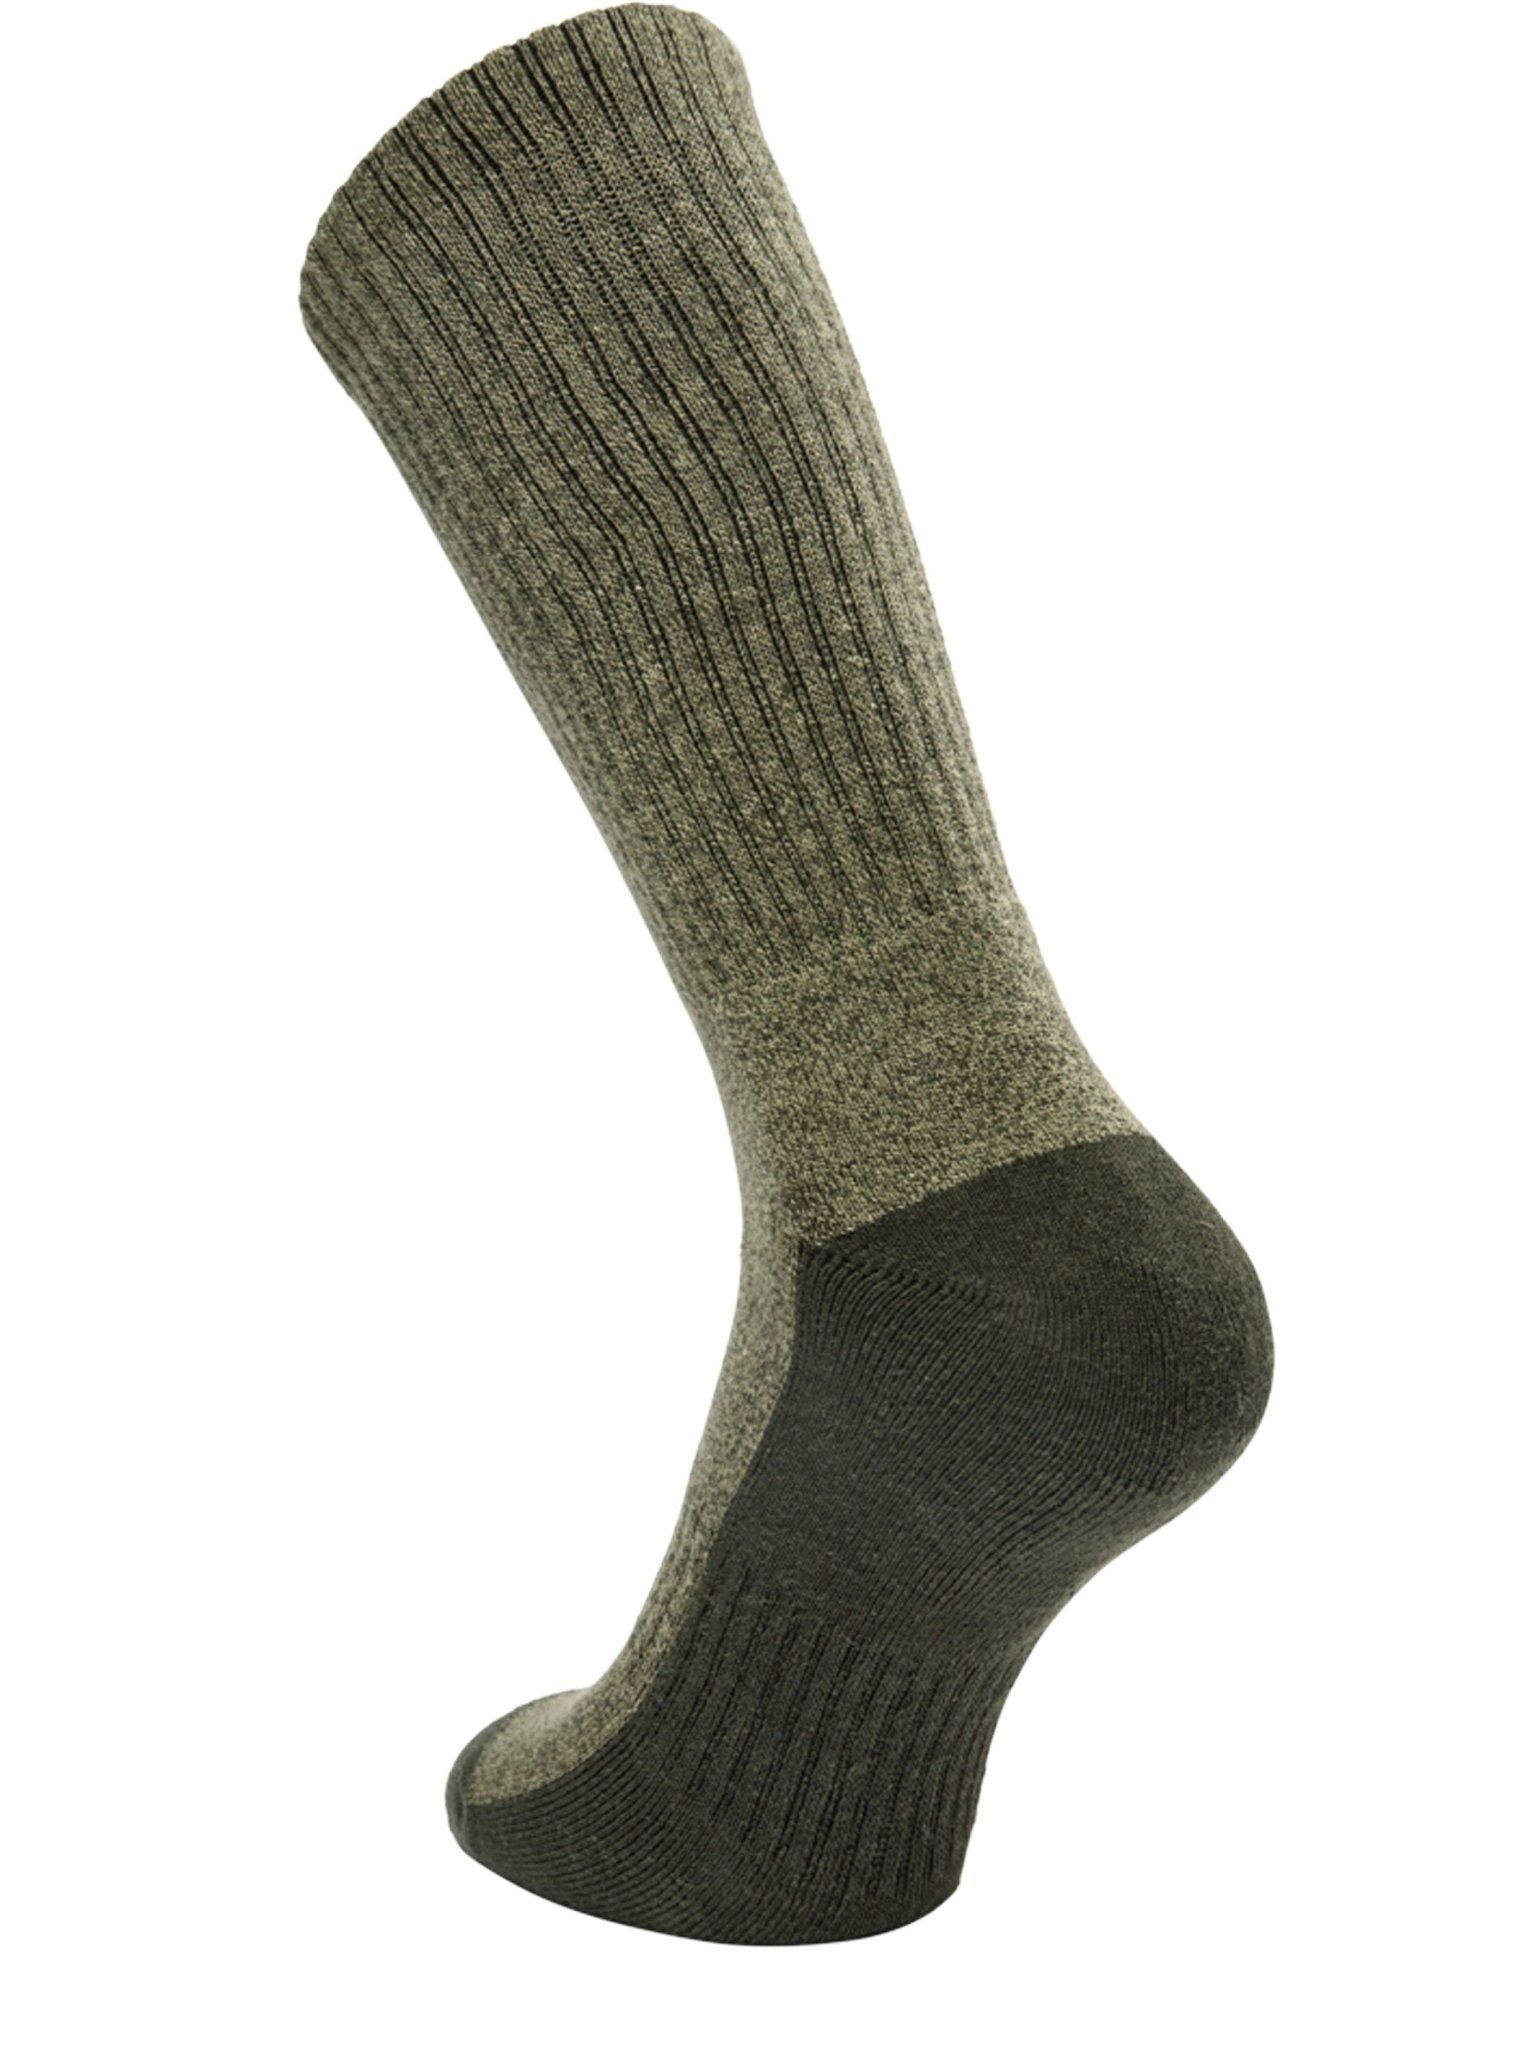 4elementsclothingDeerhunterDeerhunter - Hemp Mix Socks - Terry sole for comfort and shock absorption Ribbed arch supportSocks8305-331-3639